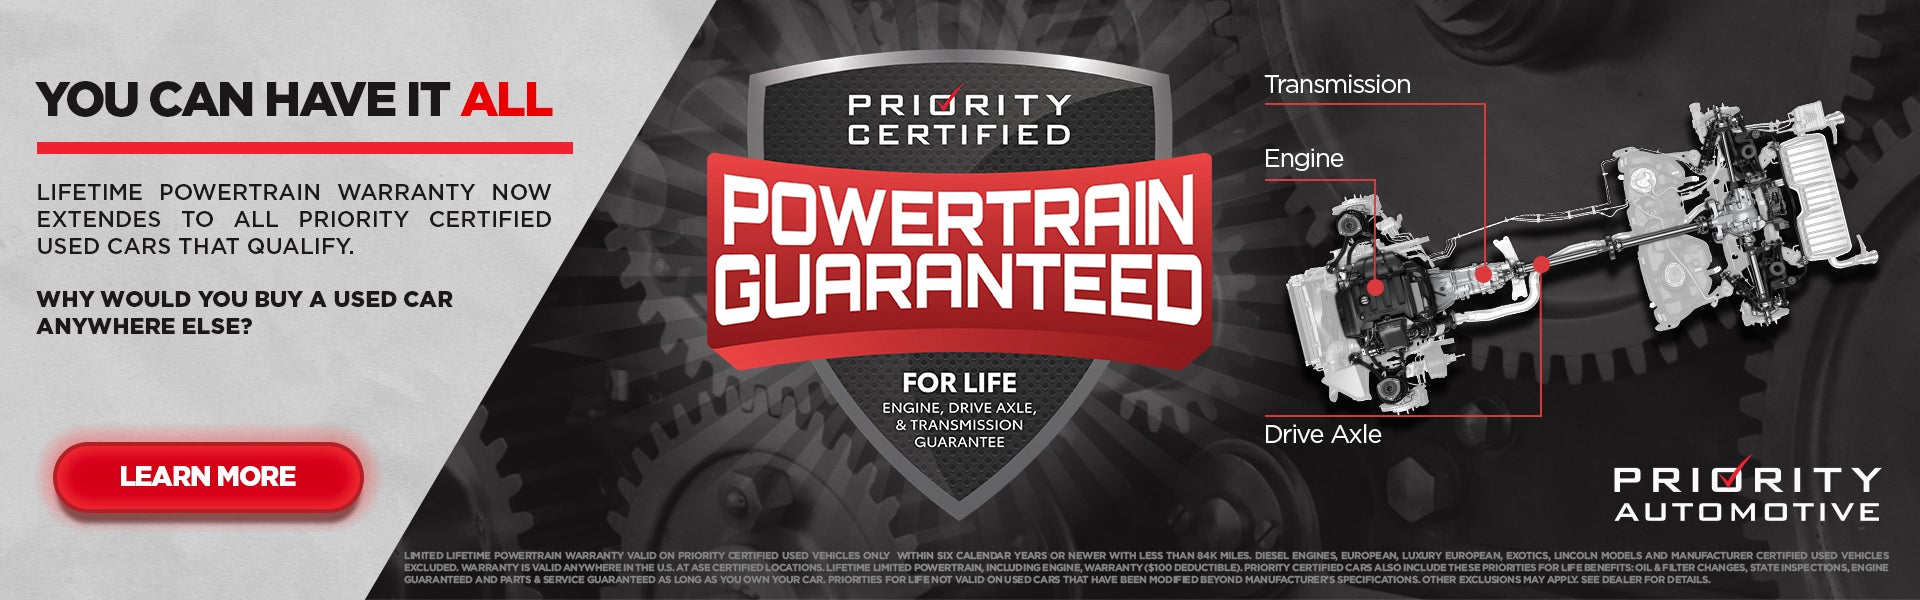 Priority Certified | Powertrain Guaranteed for Life